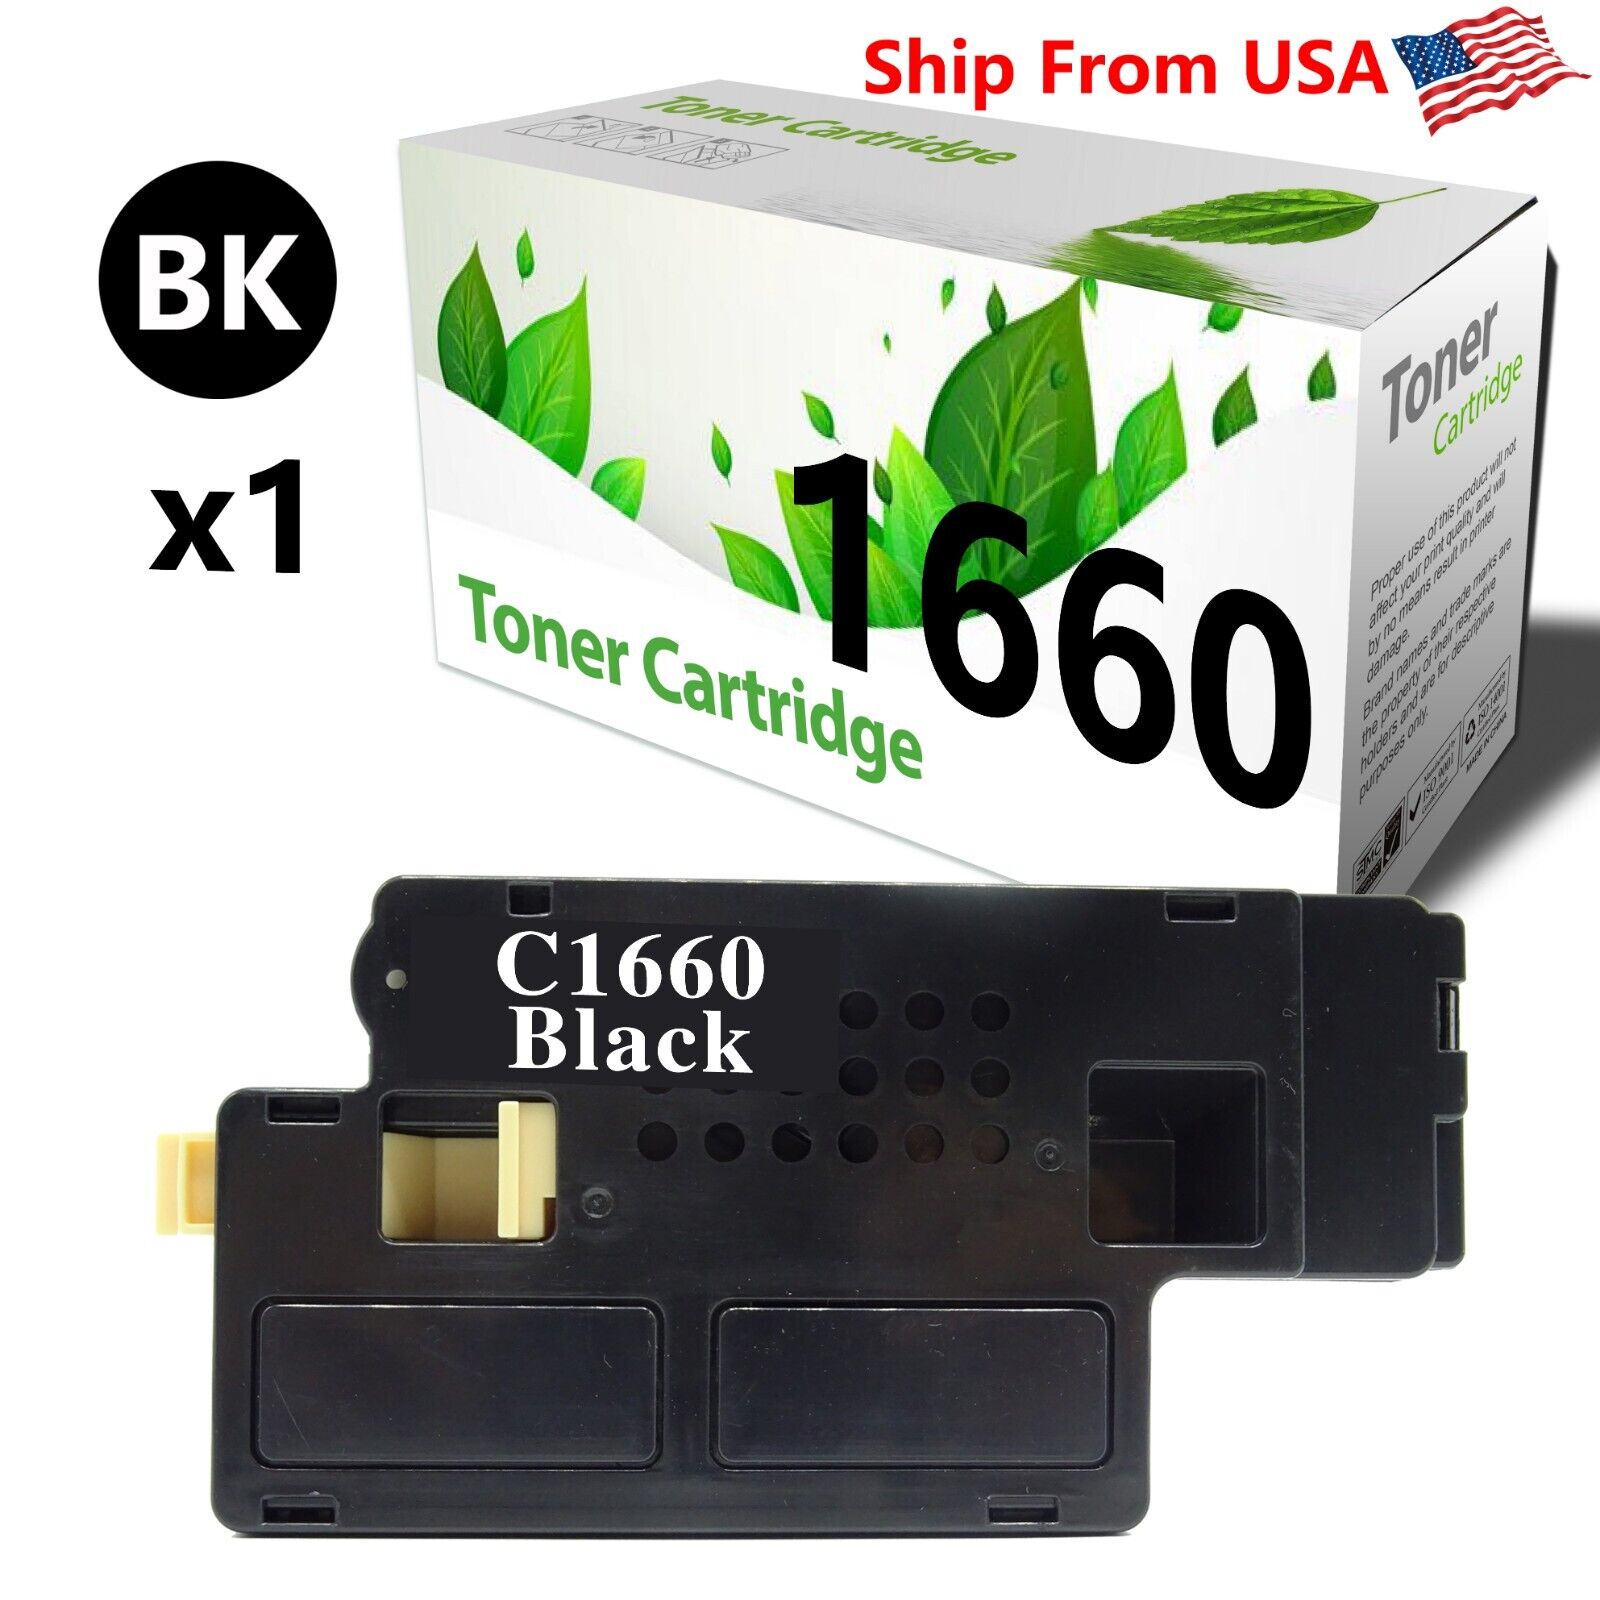 1-Pack of Black C1660 Toner Cartridge Replacement for C1660cnw Printer